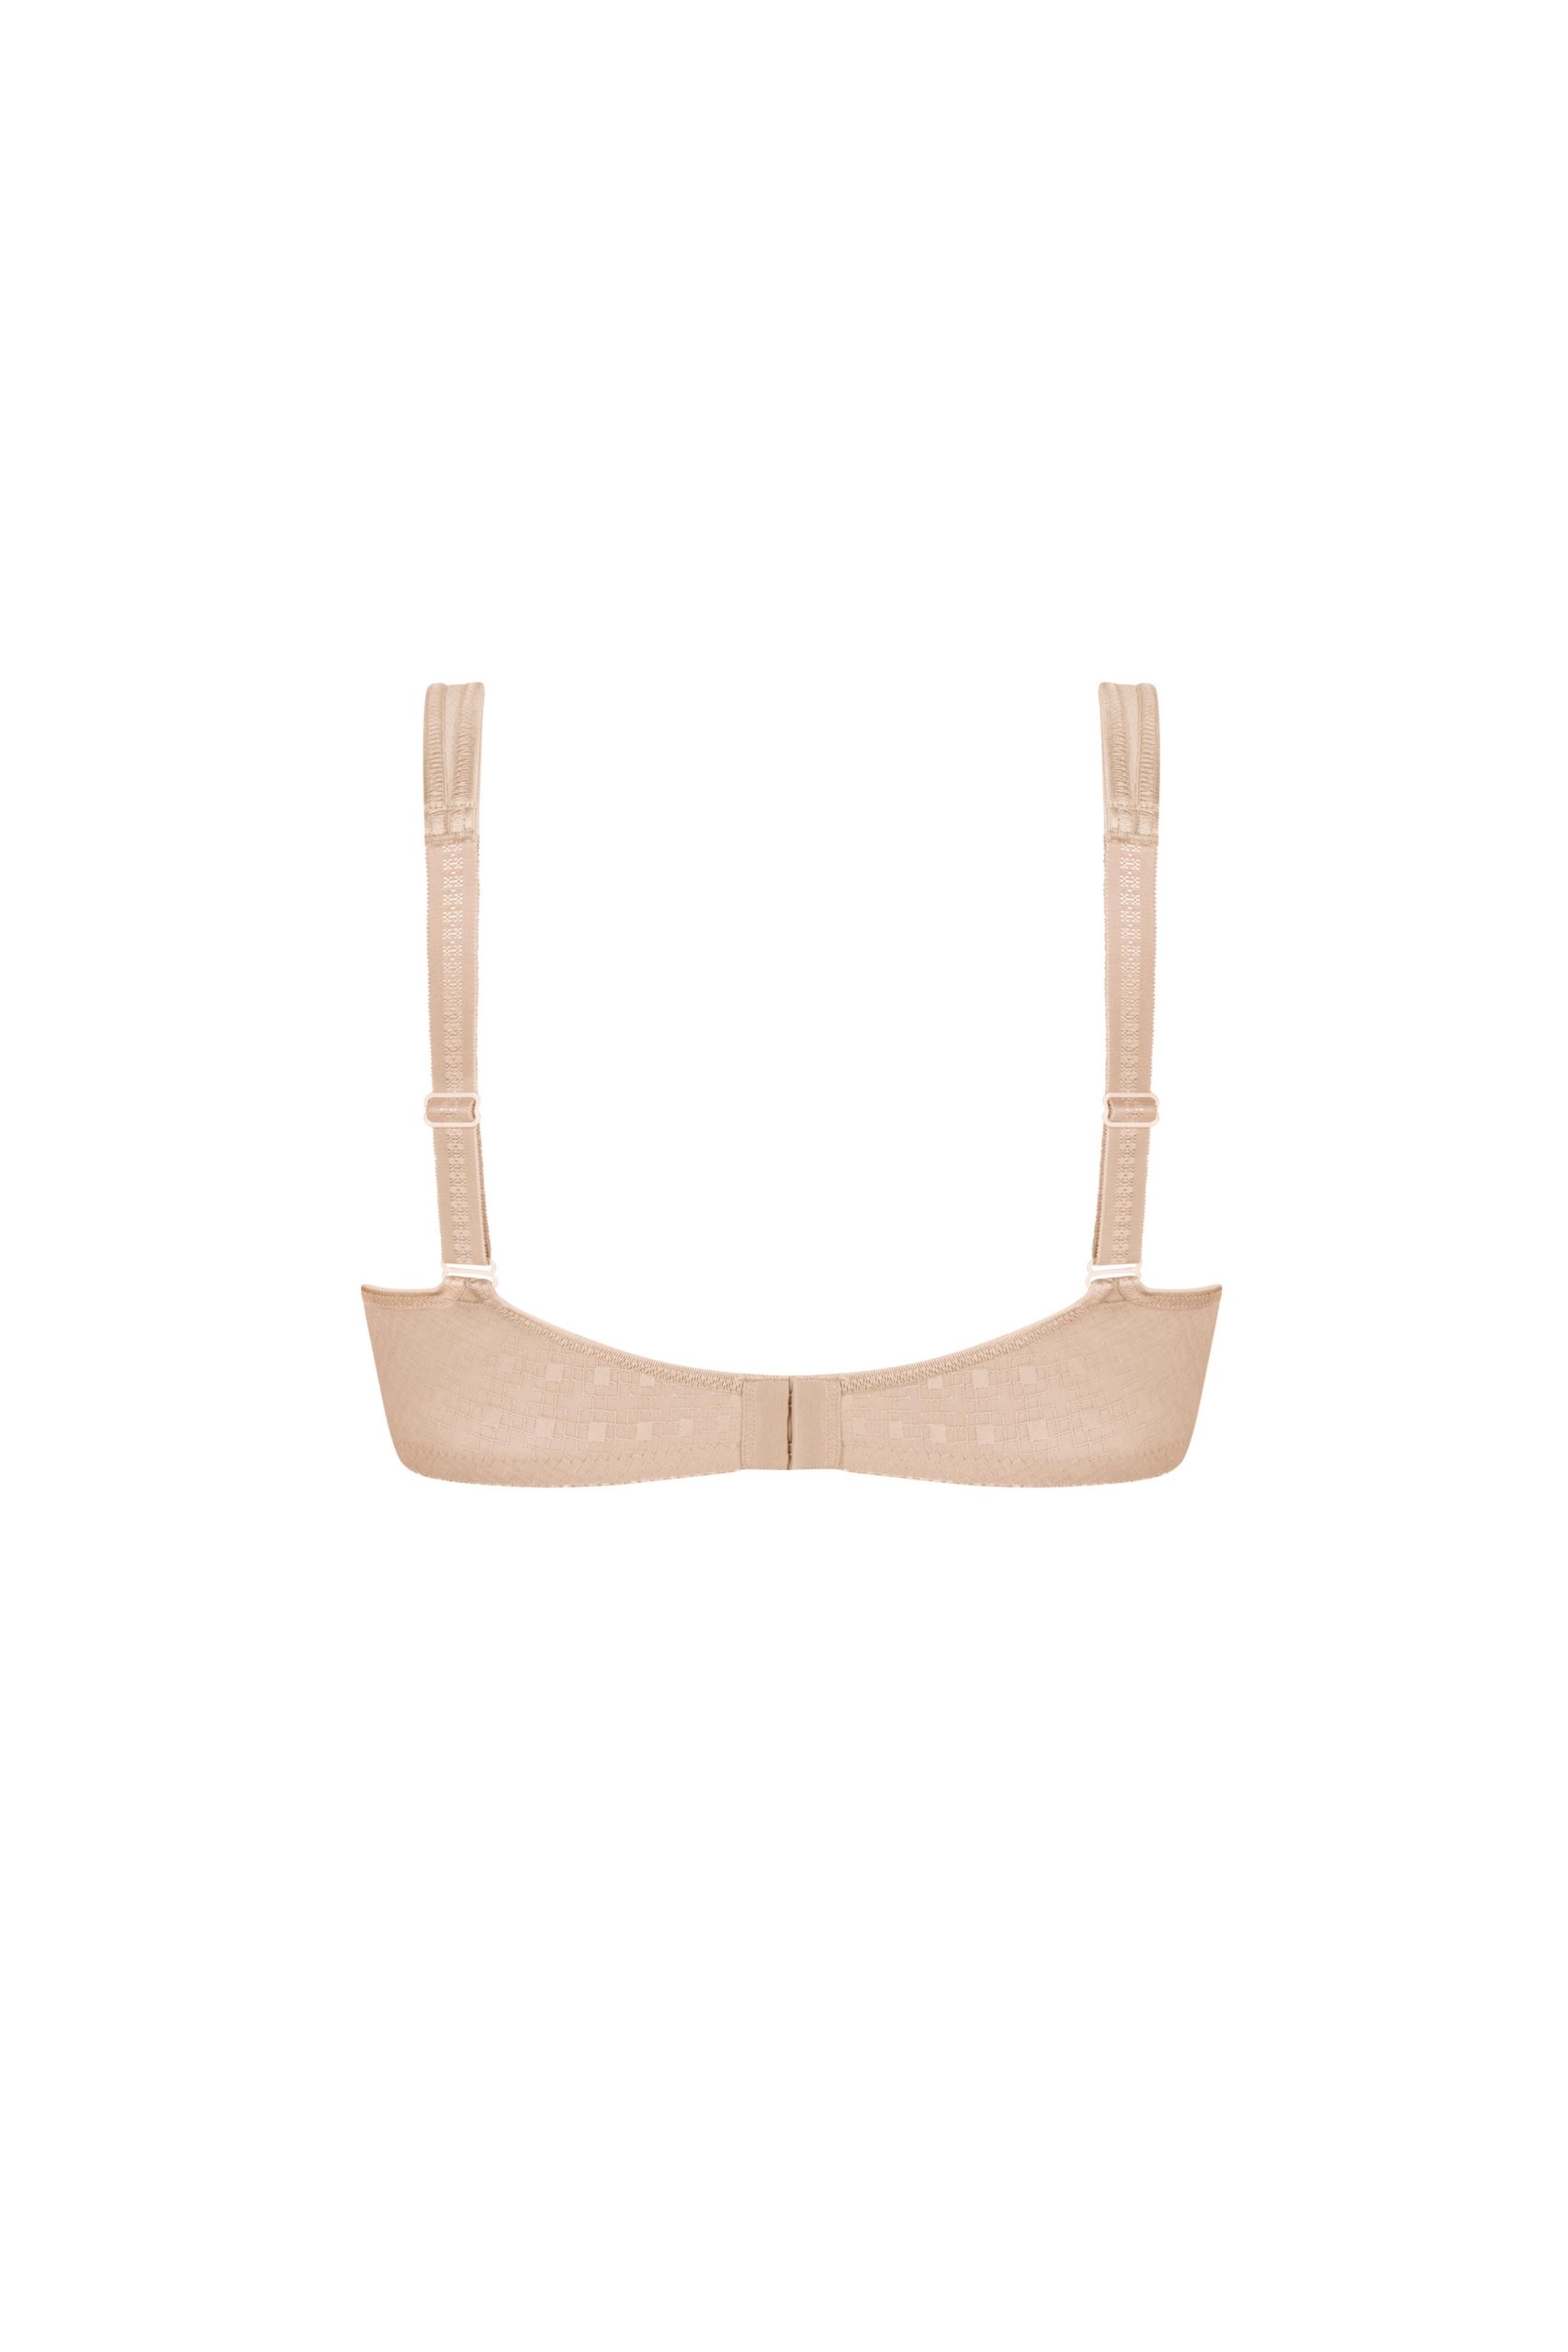 Other Wireless bra basic block/sloper The Bra Makery pattern